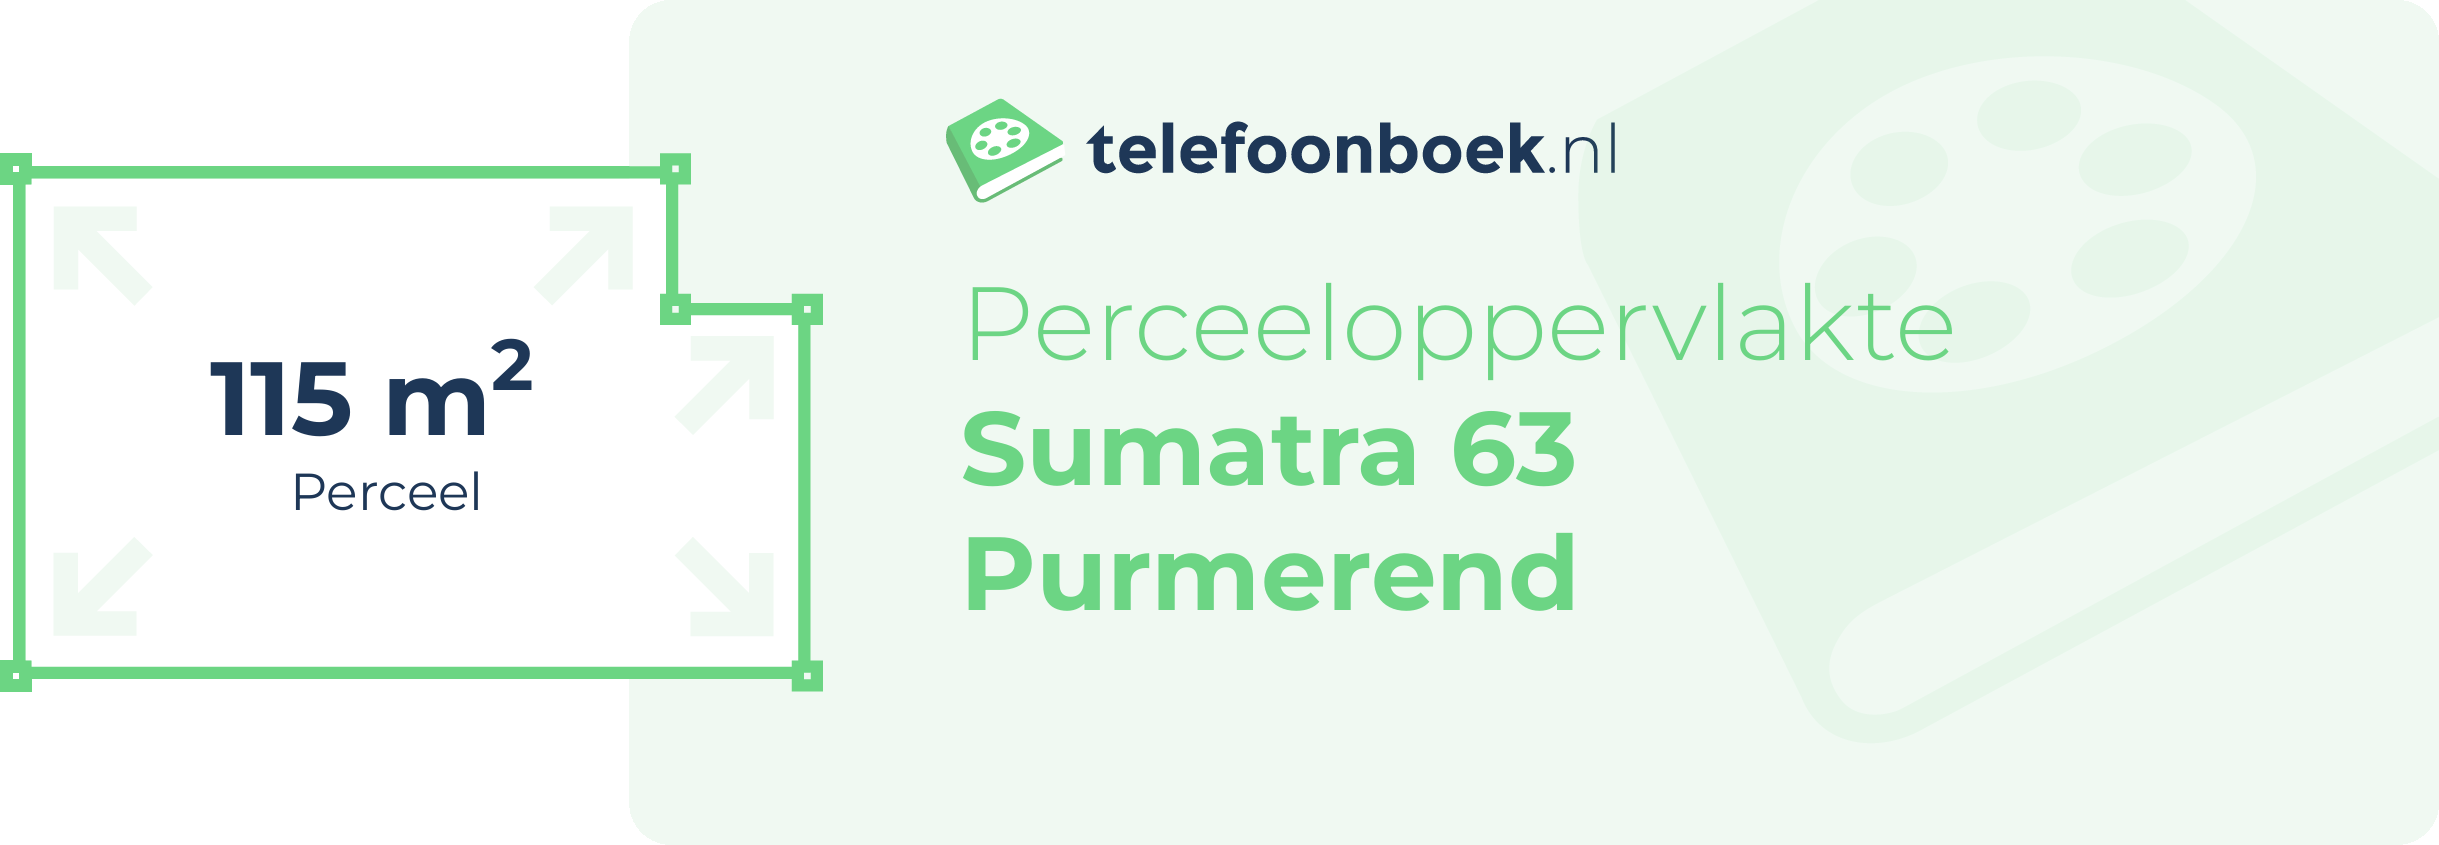 Perceeloppervlakte Sumatra 63 Purmerend